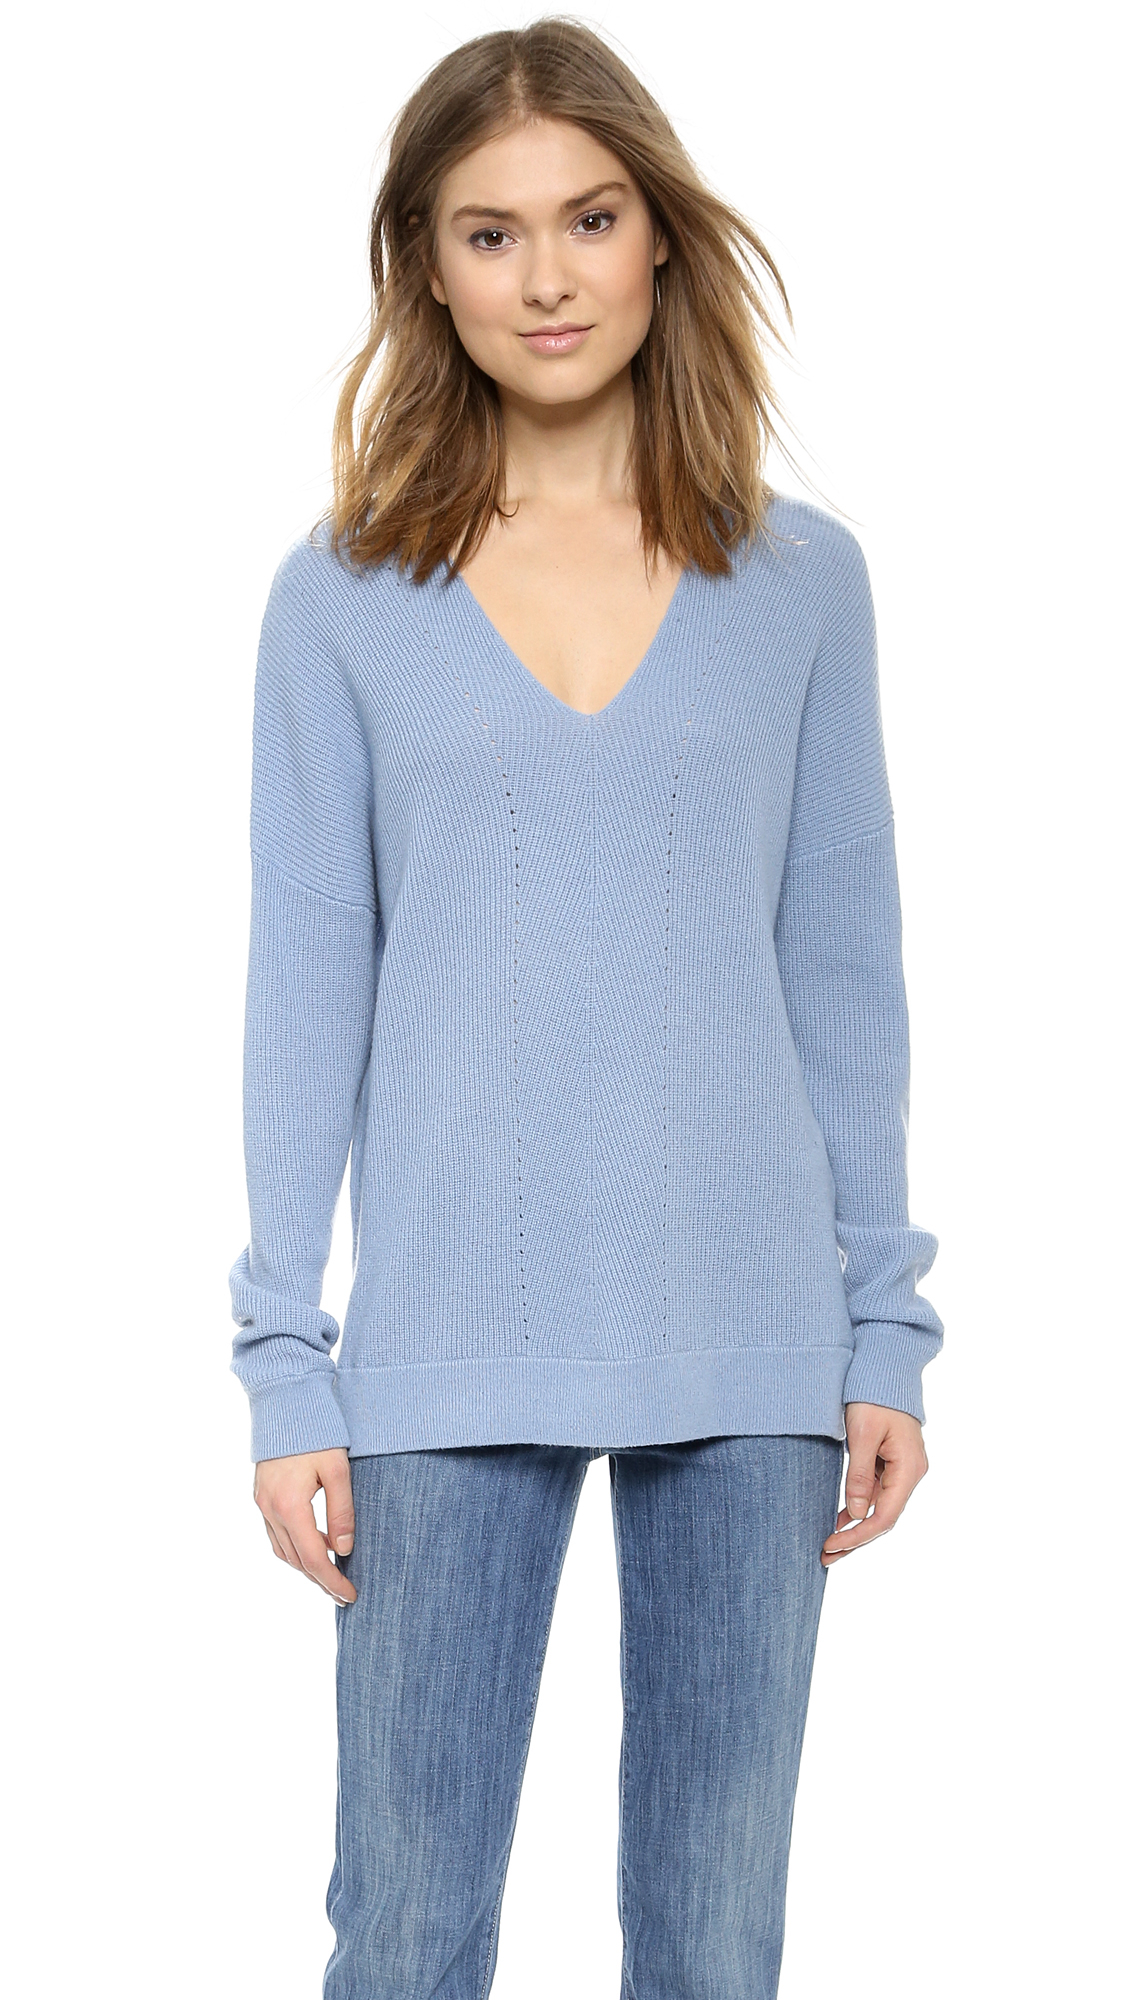 Blue cashmere sweater gallery MHRUXDJ